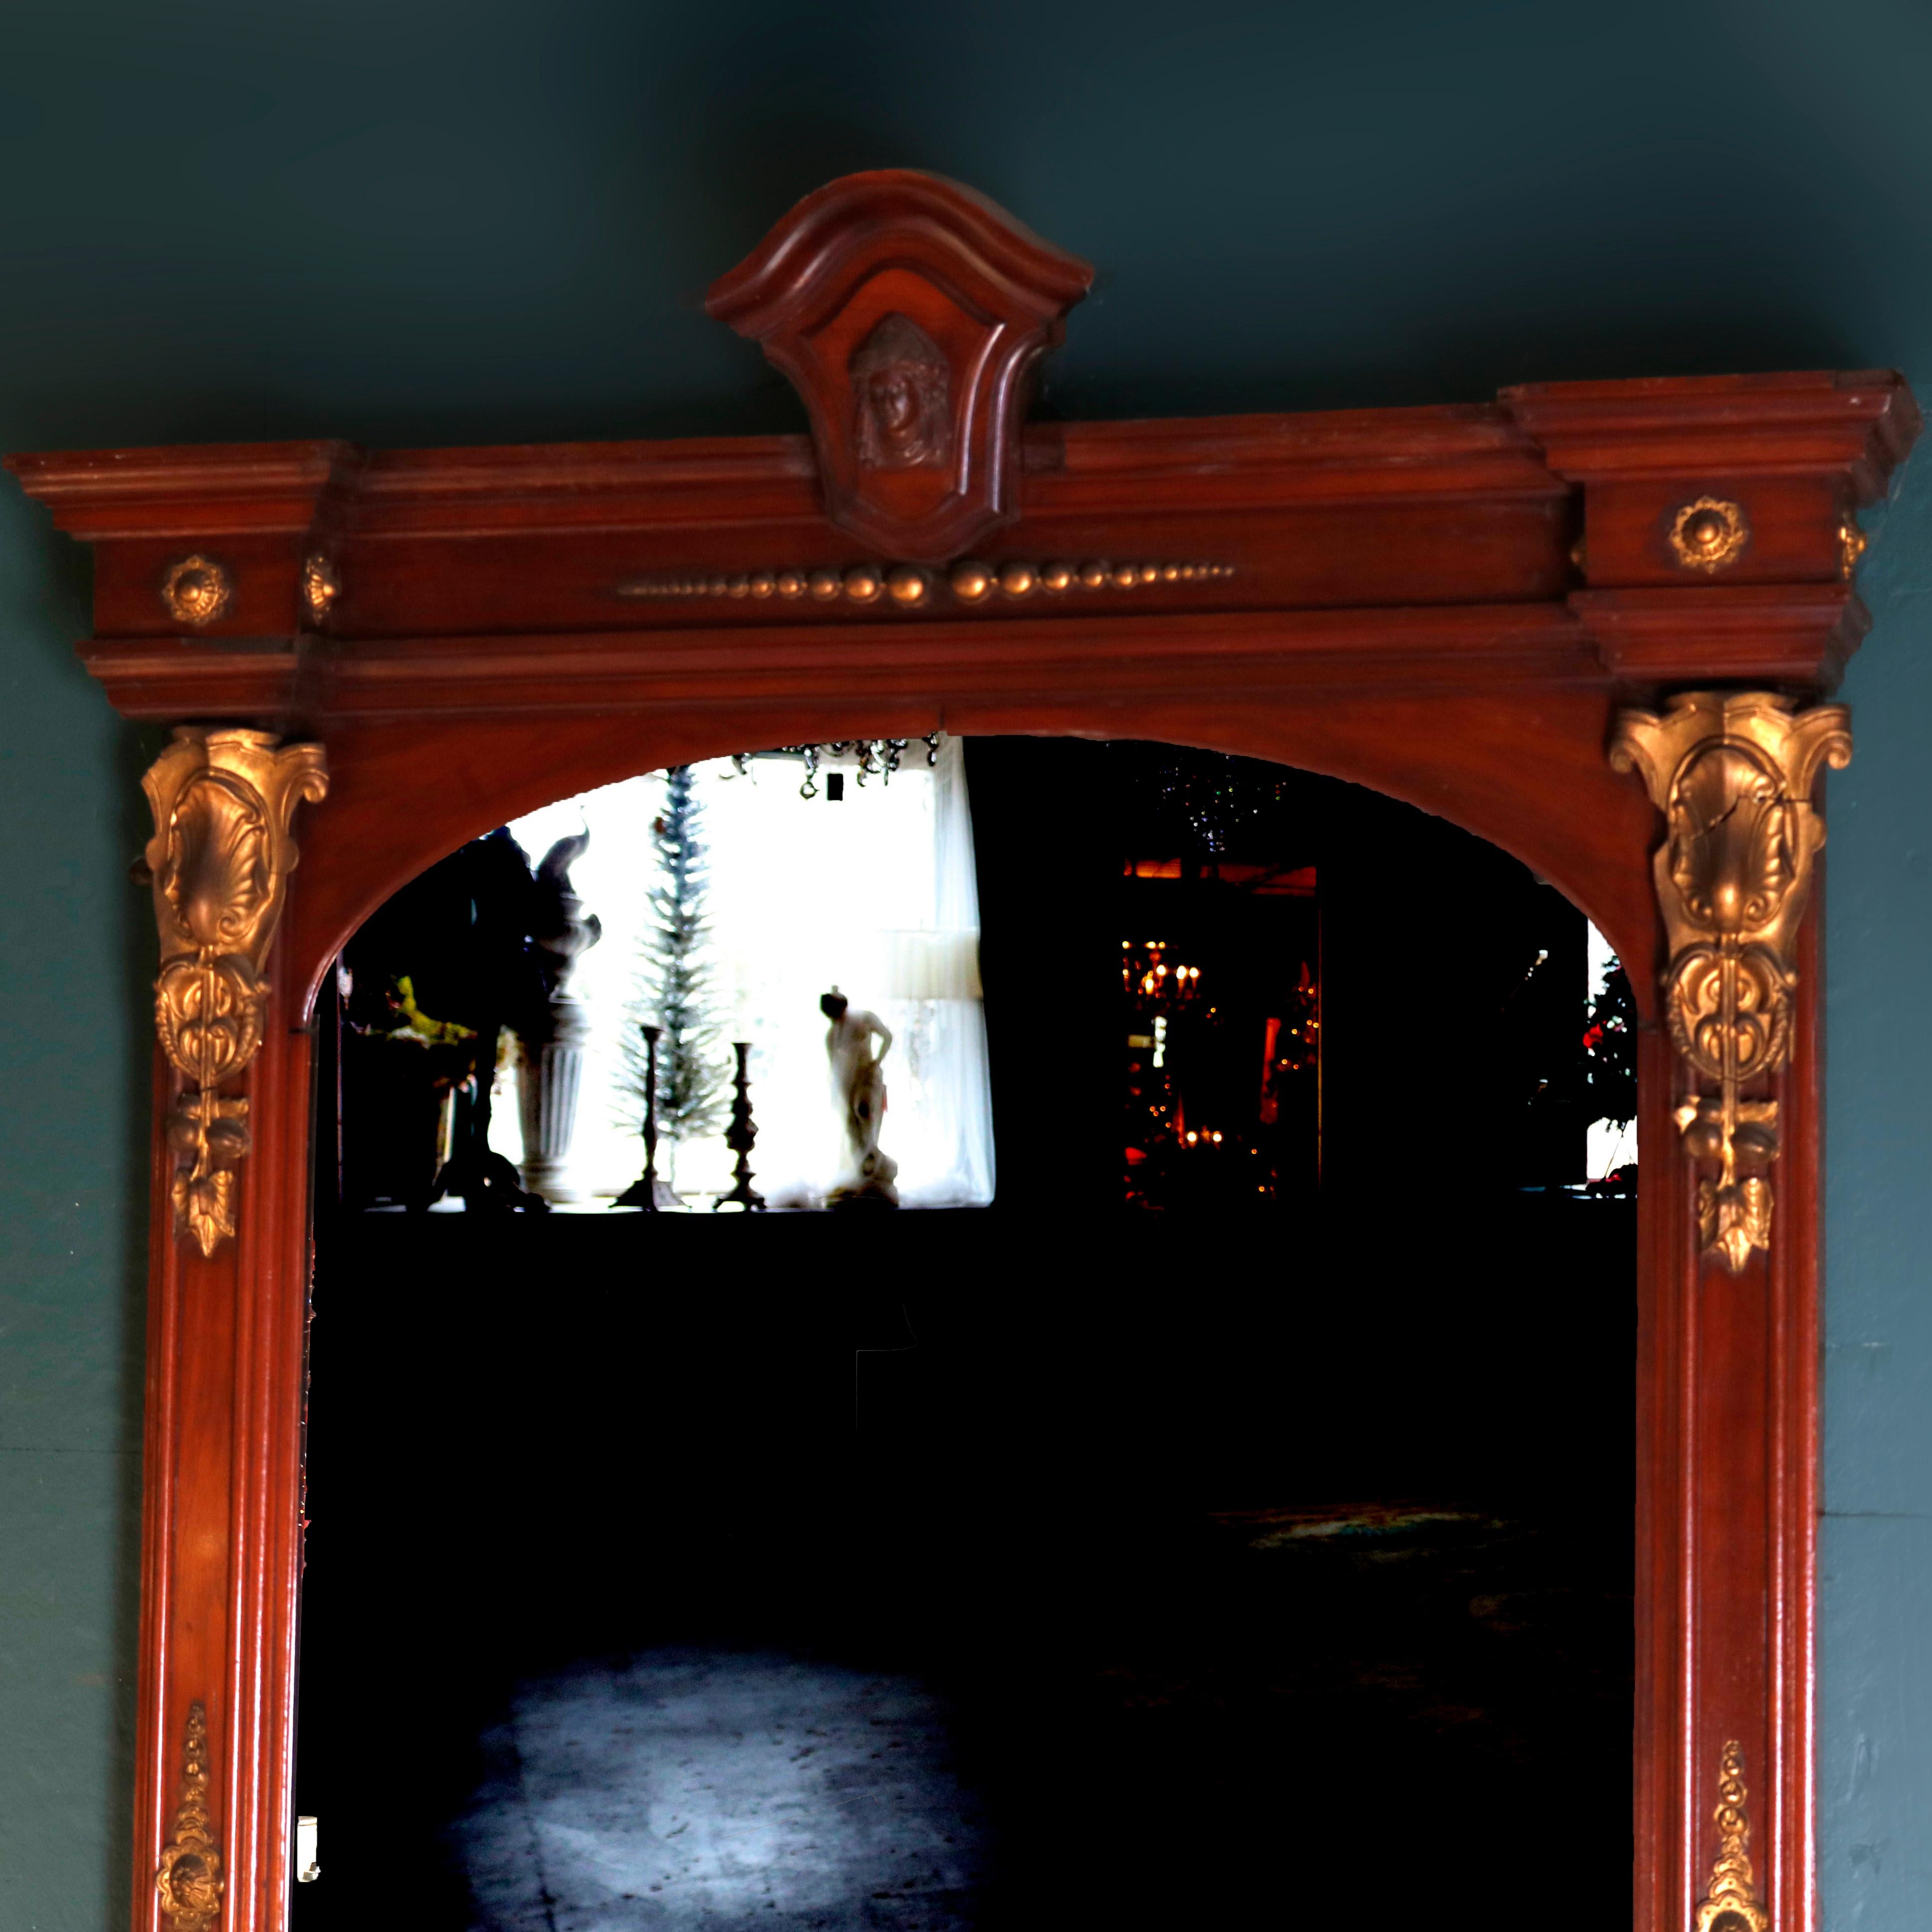 Renaissance Revival Monumental Antique Parcel-Gilt Walnut Pier Mirror with Carved Jenny Lind